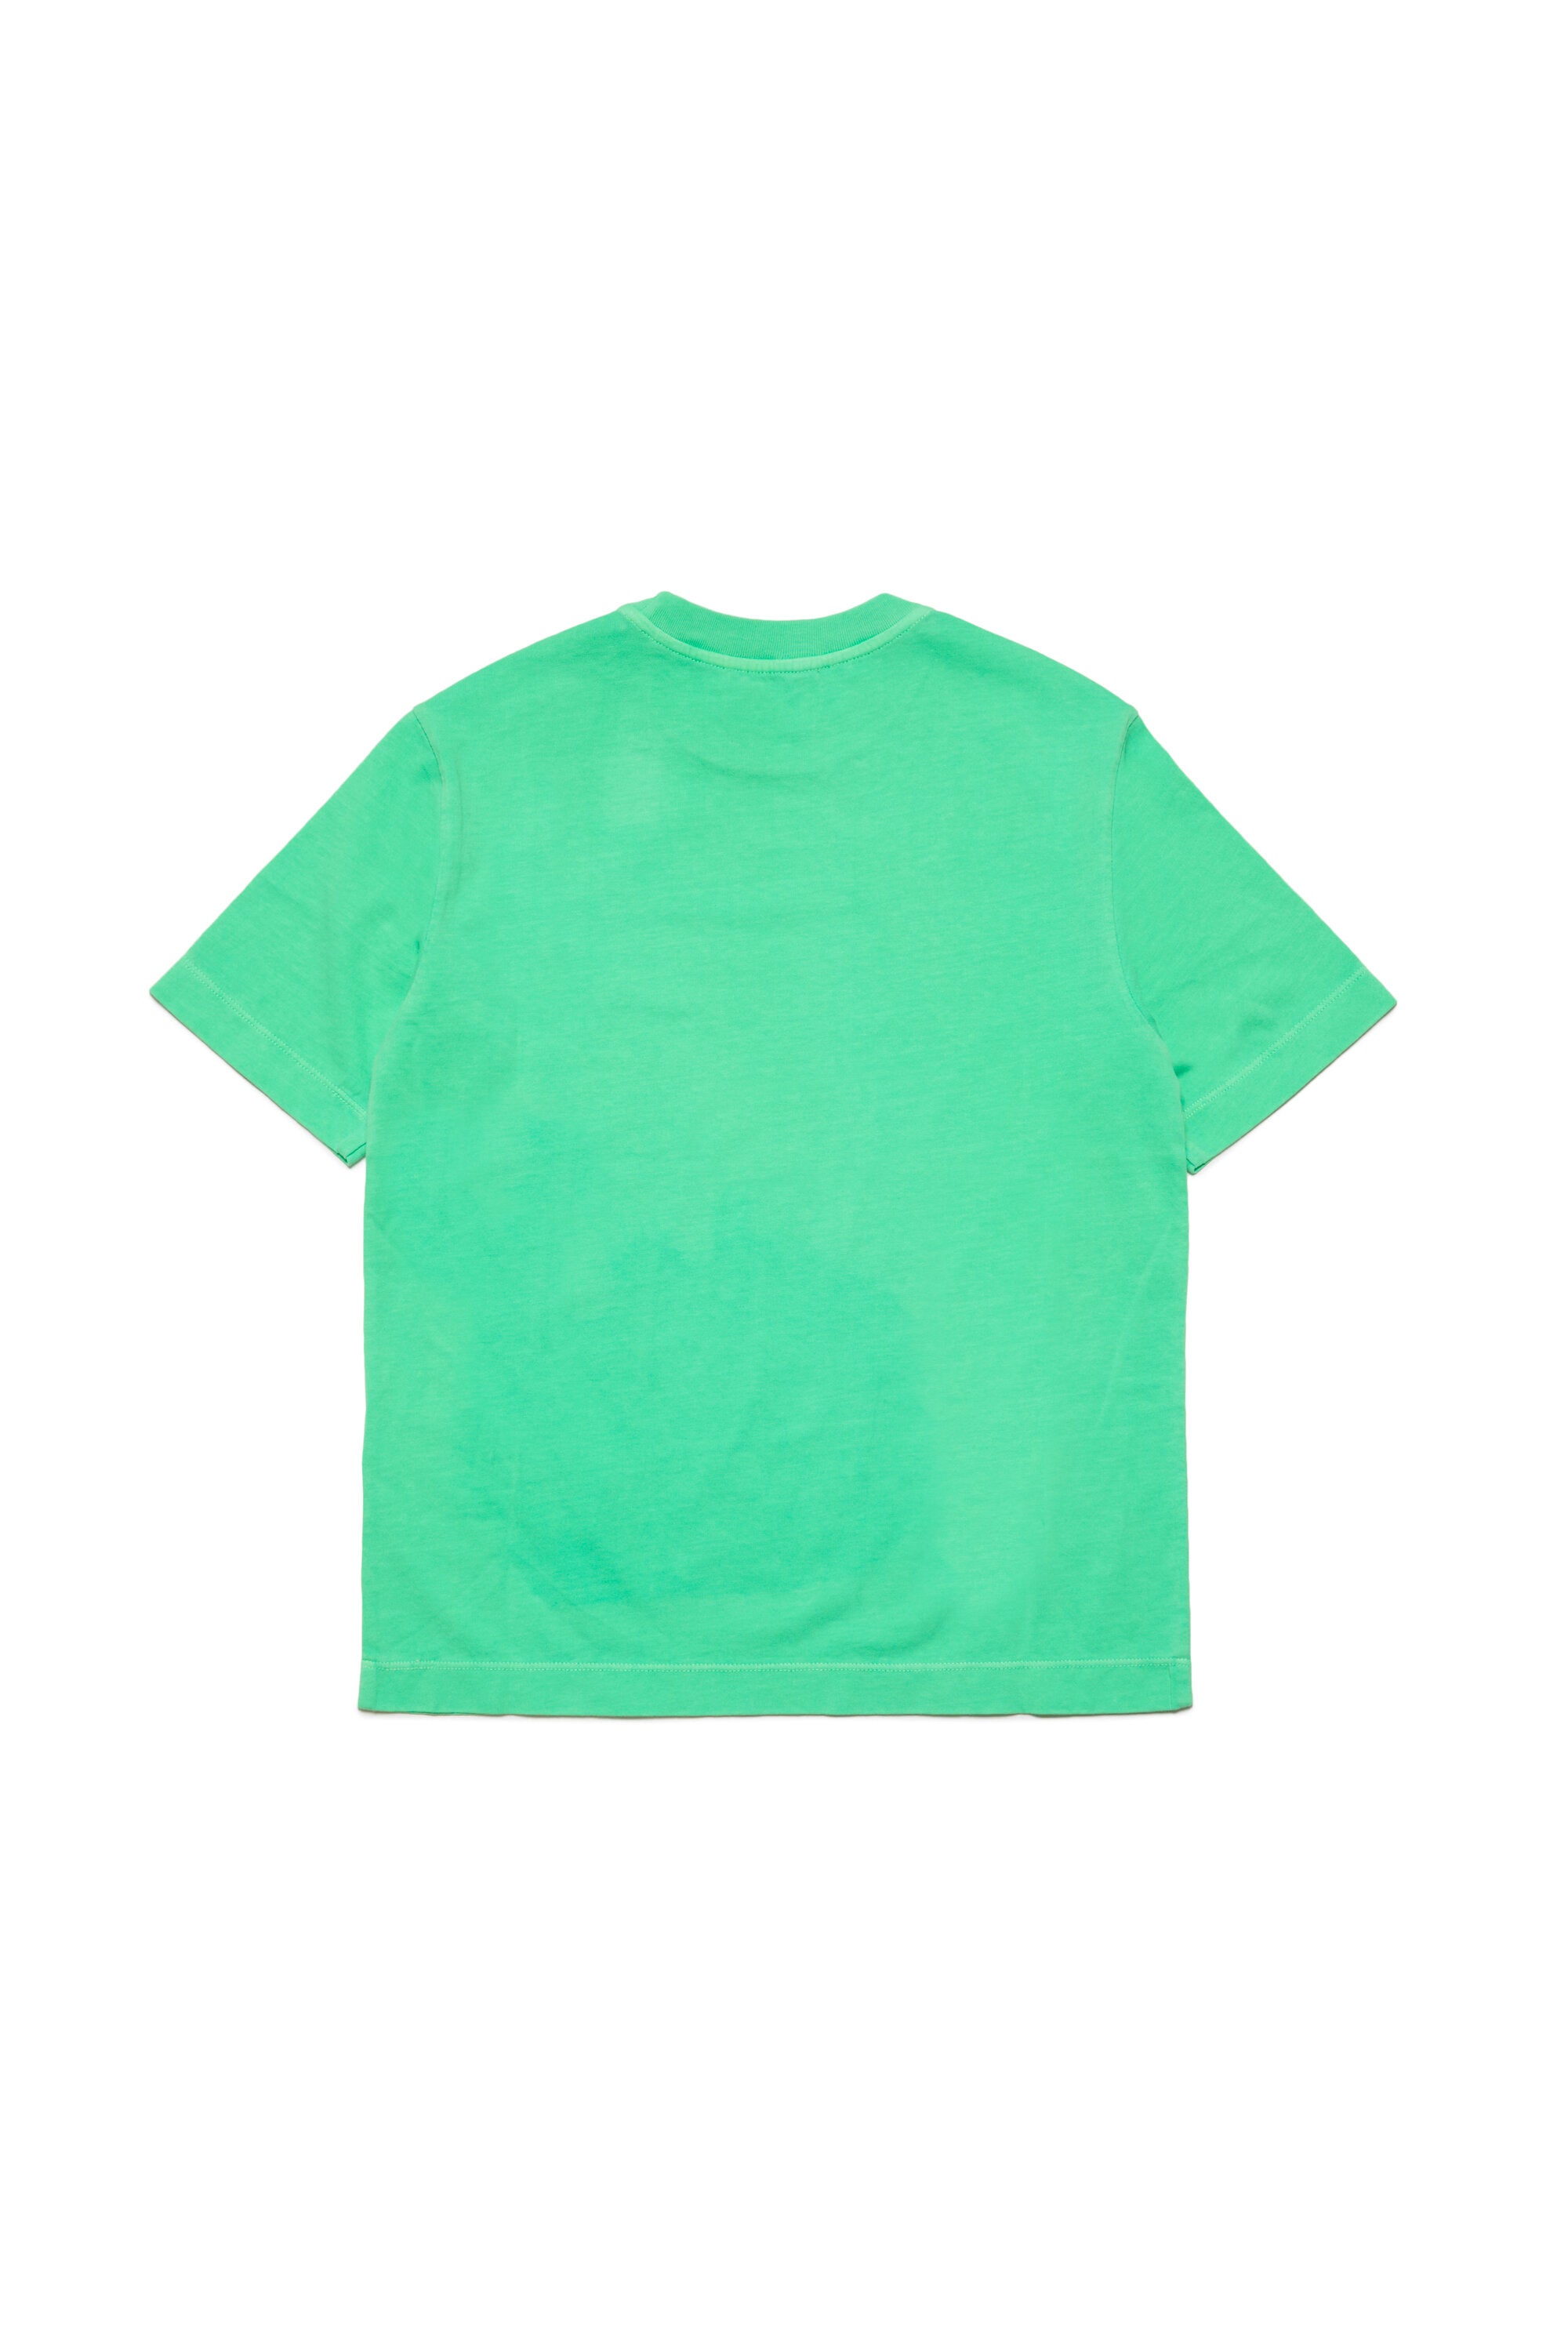 Fluorescent branded T-shirt